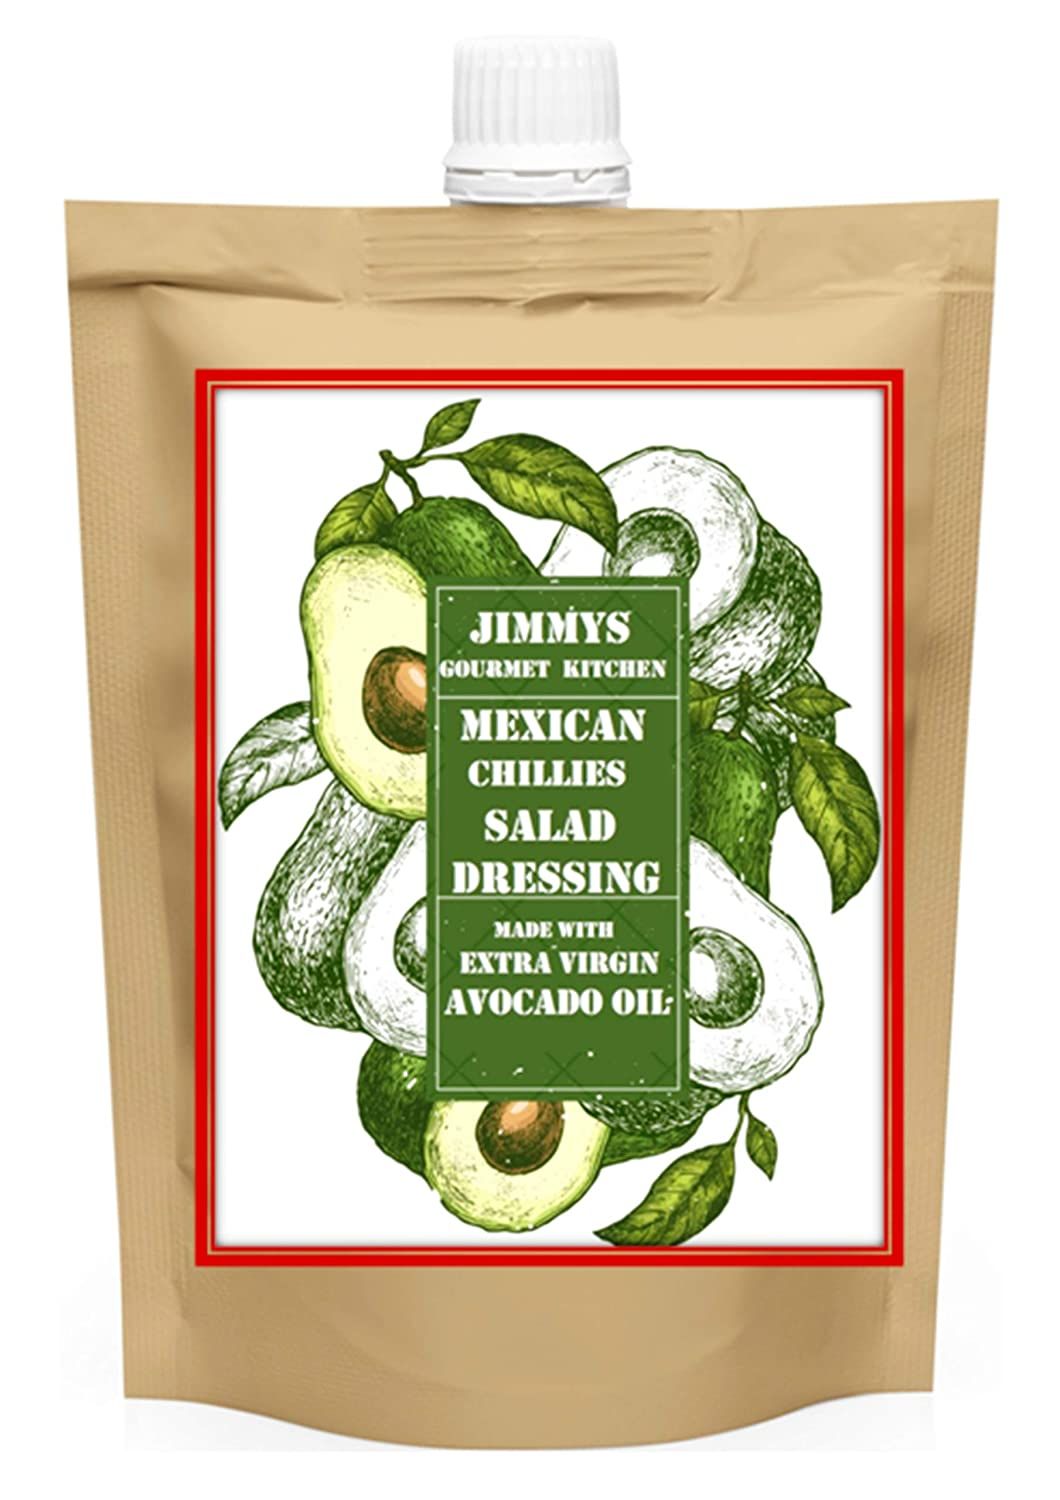 Jimmy's Gourmet Kitchen Natural Salad Dressing Image